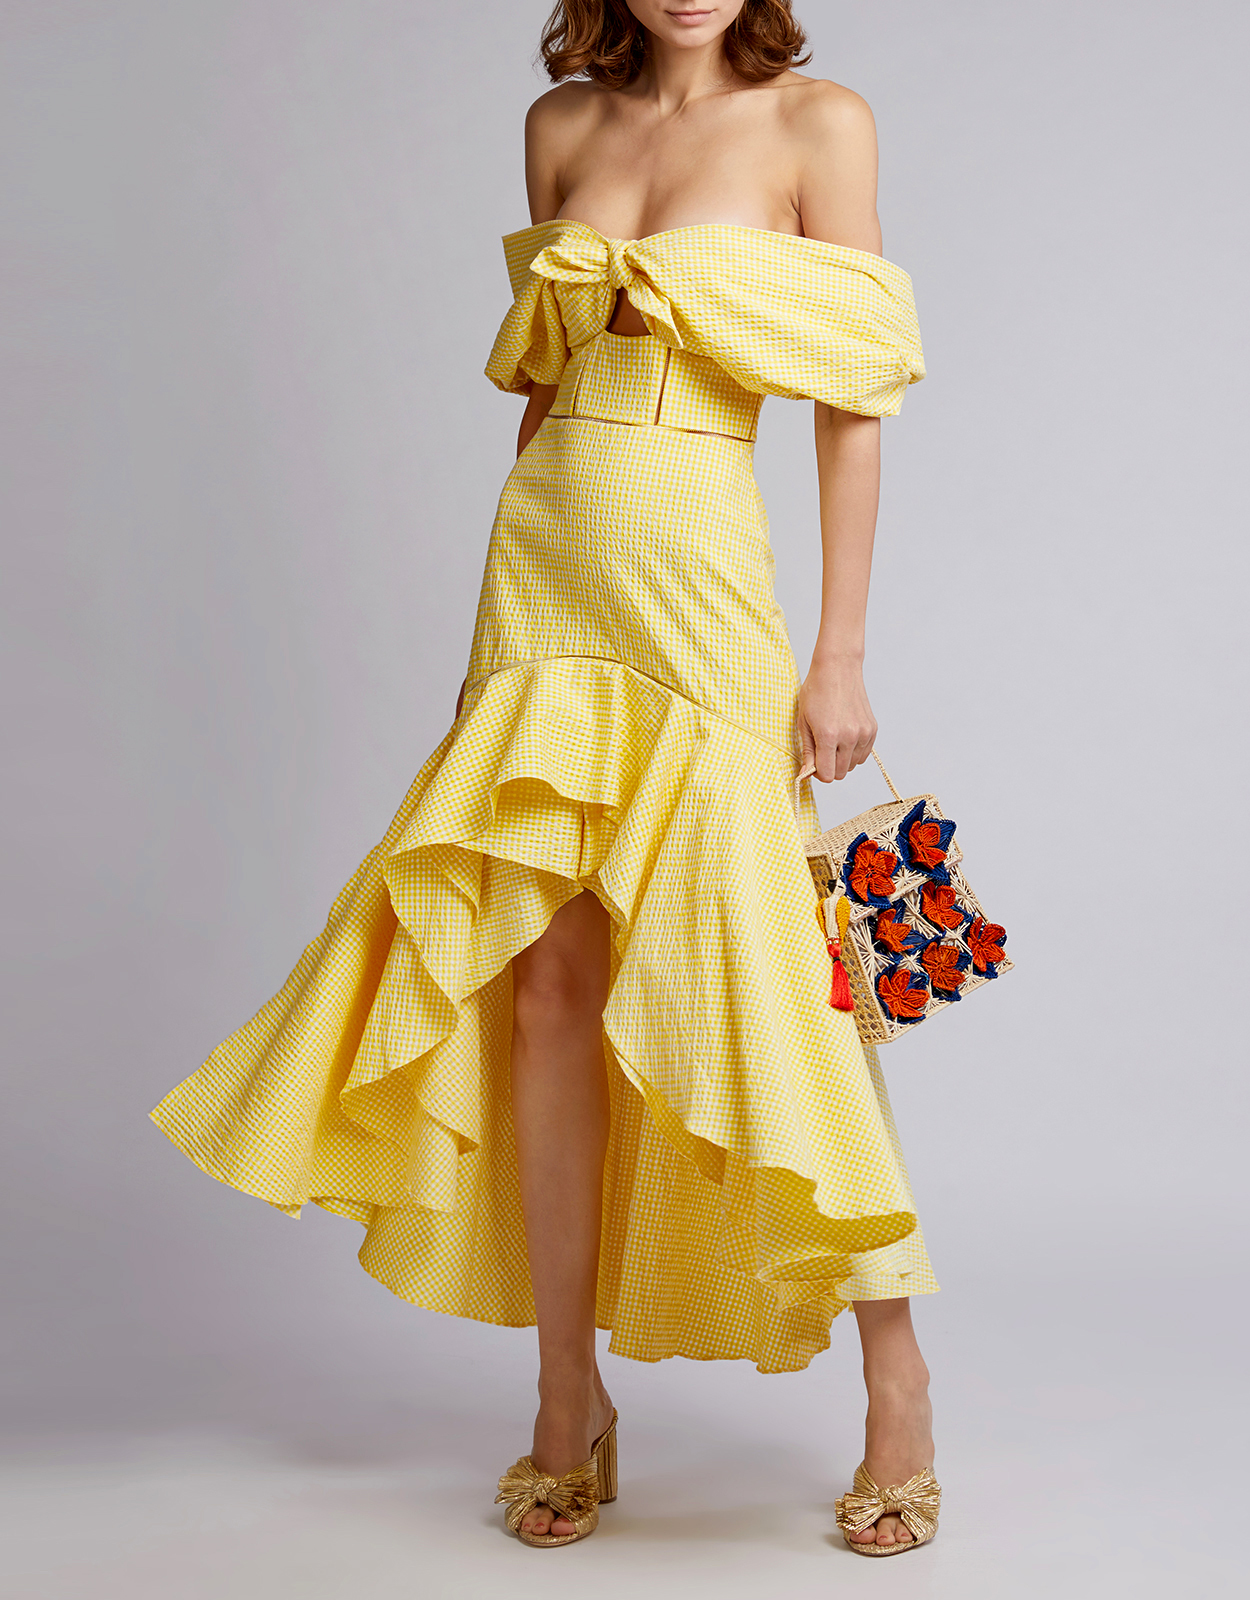 Tower Lace Ruffle Dress by Jonathan Simkhai for Hire